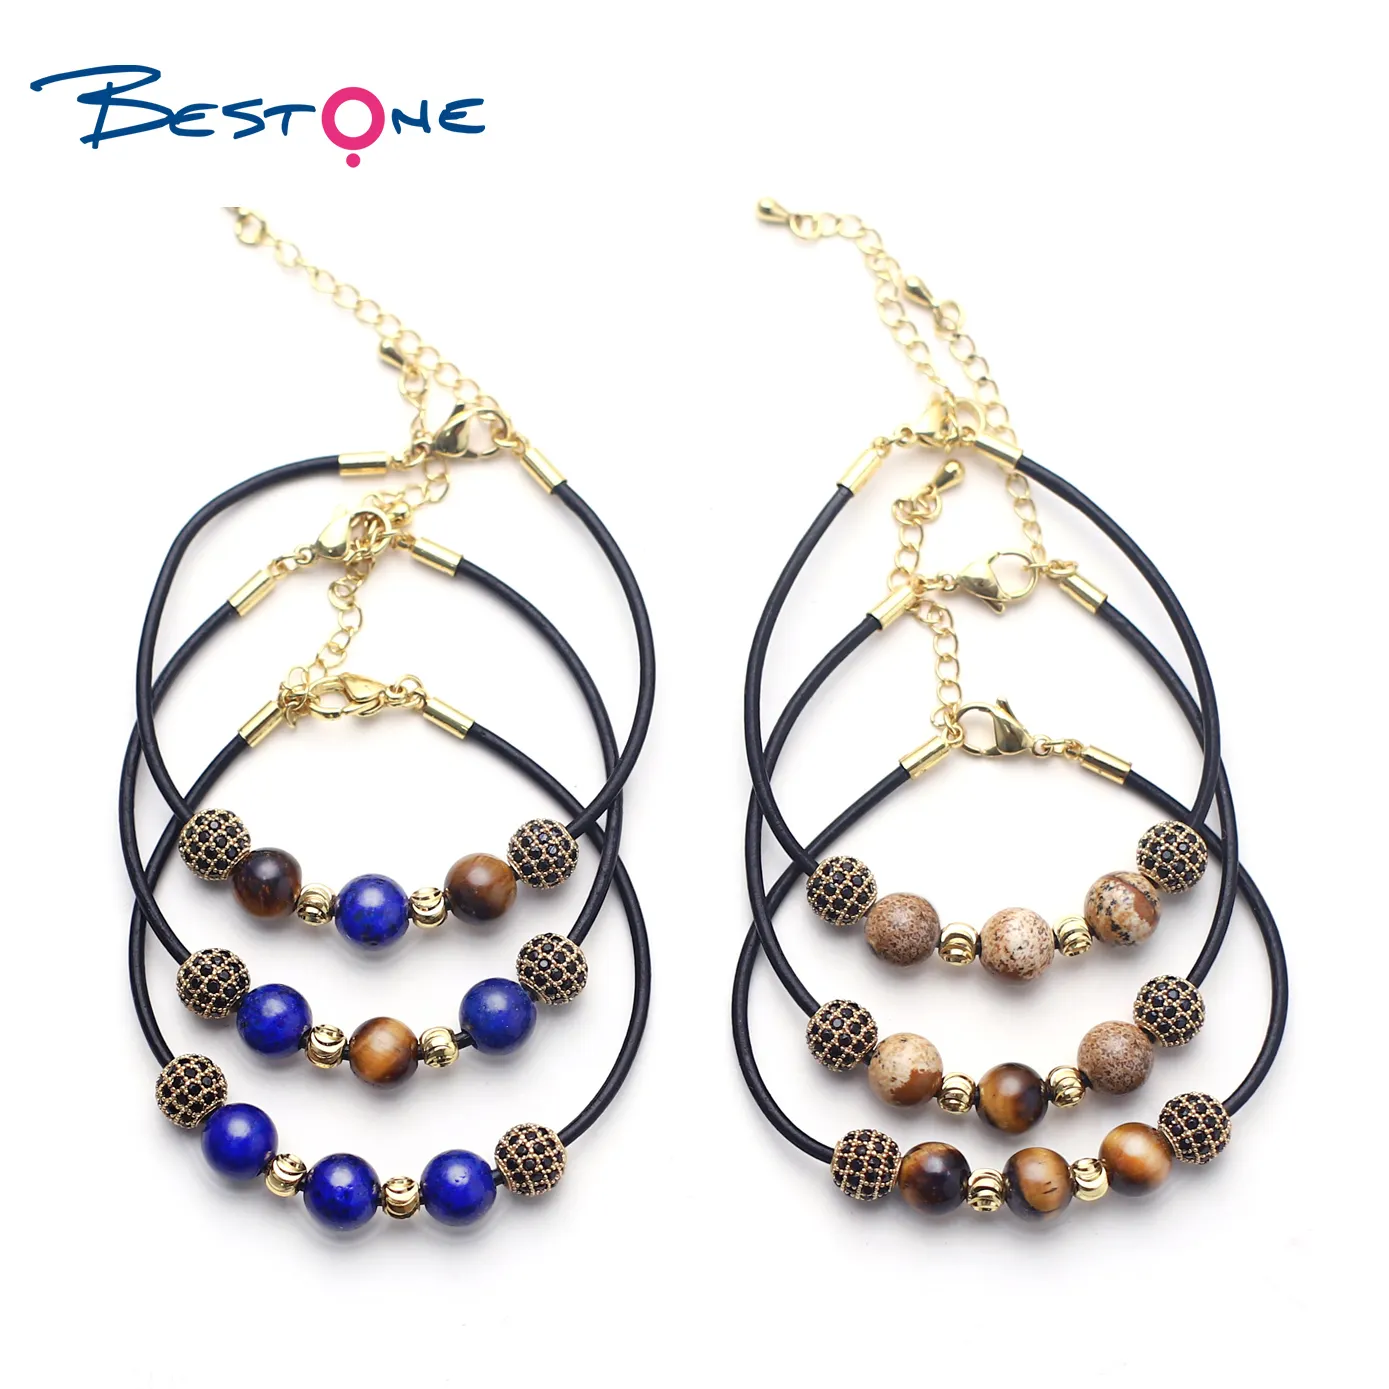 Bestone DIY Handmade Fashion Semi-Precious Beads Rope Bracelet Natural Gemstone Adjustable Beads Bracelet for Women